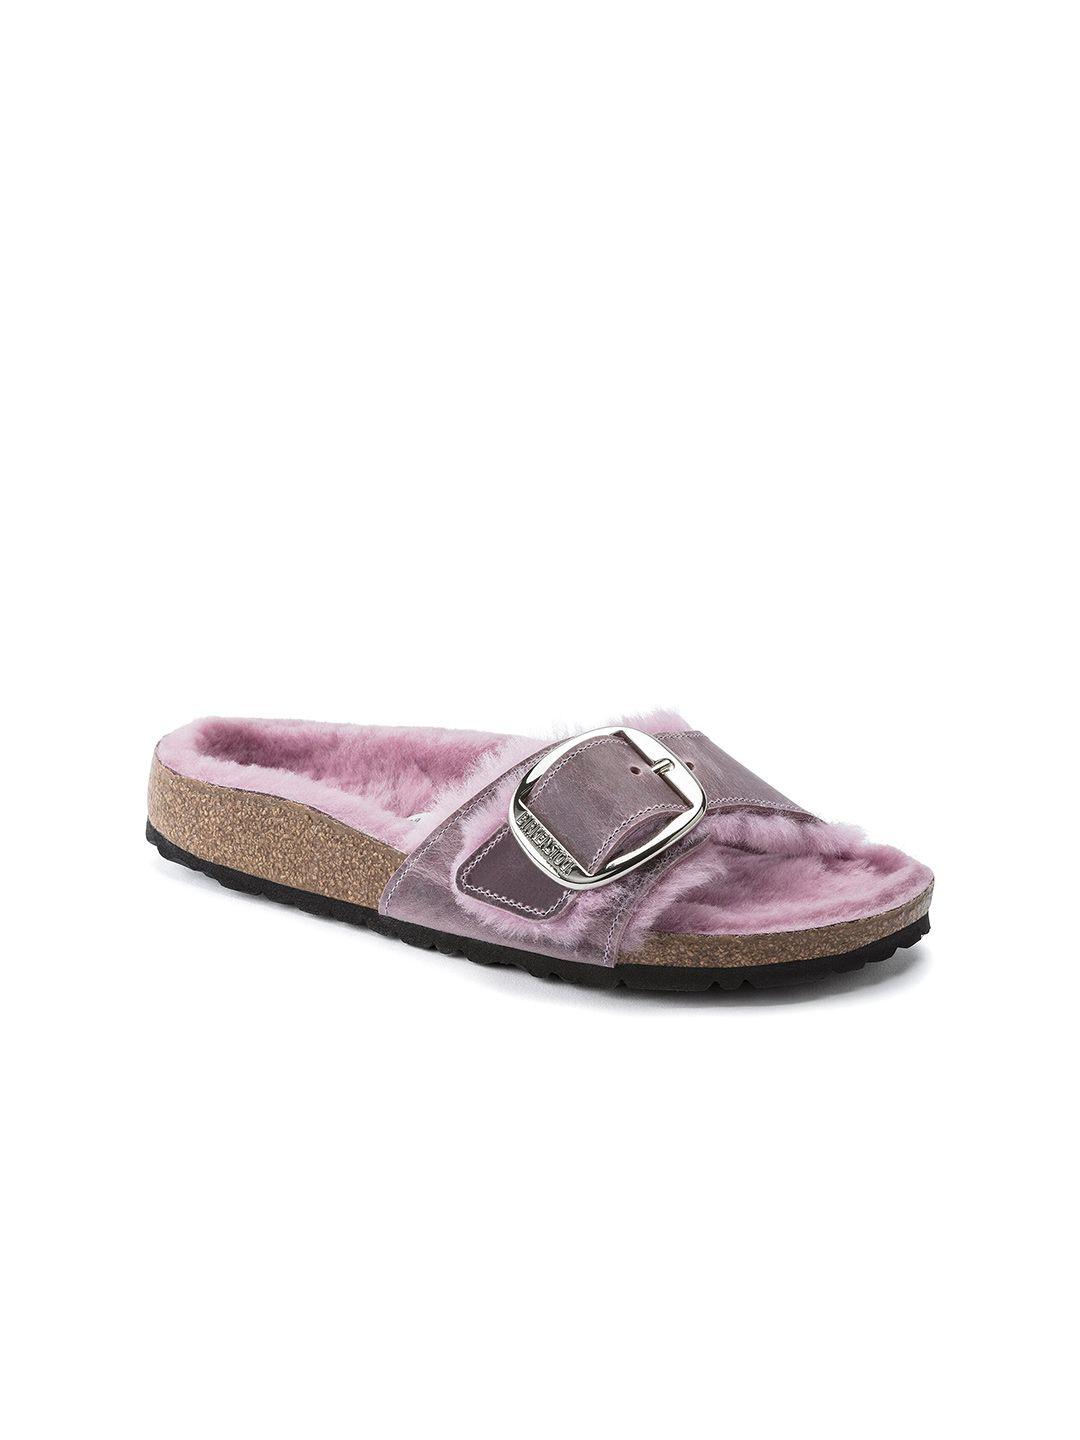 birkenstock women lavender nubuck leather shearling narrow madrid room slippers